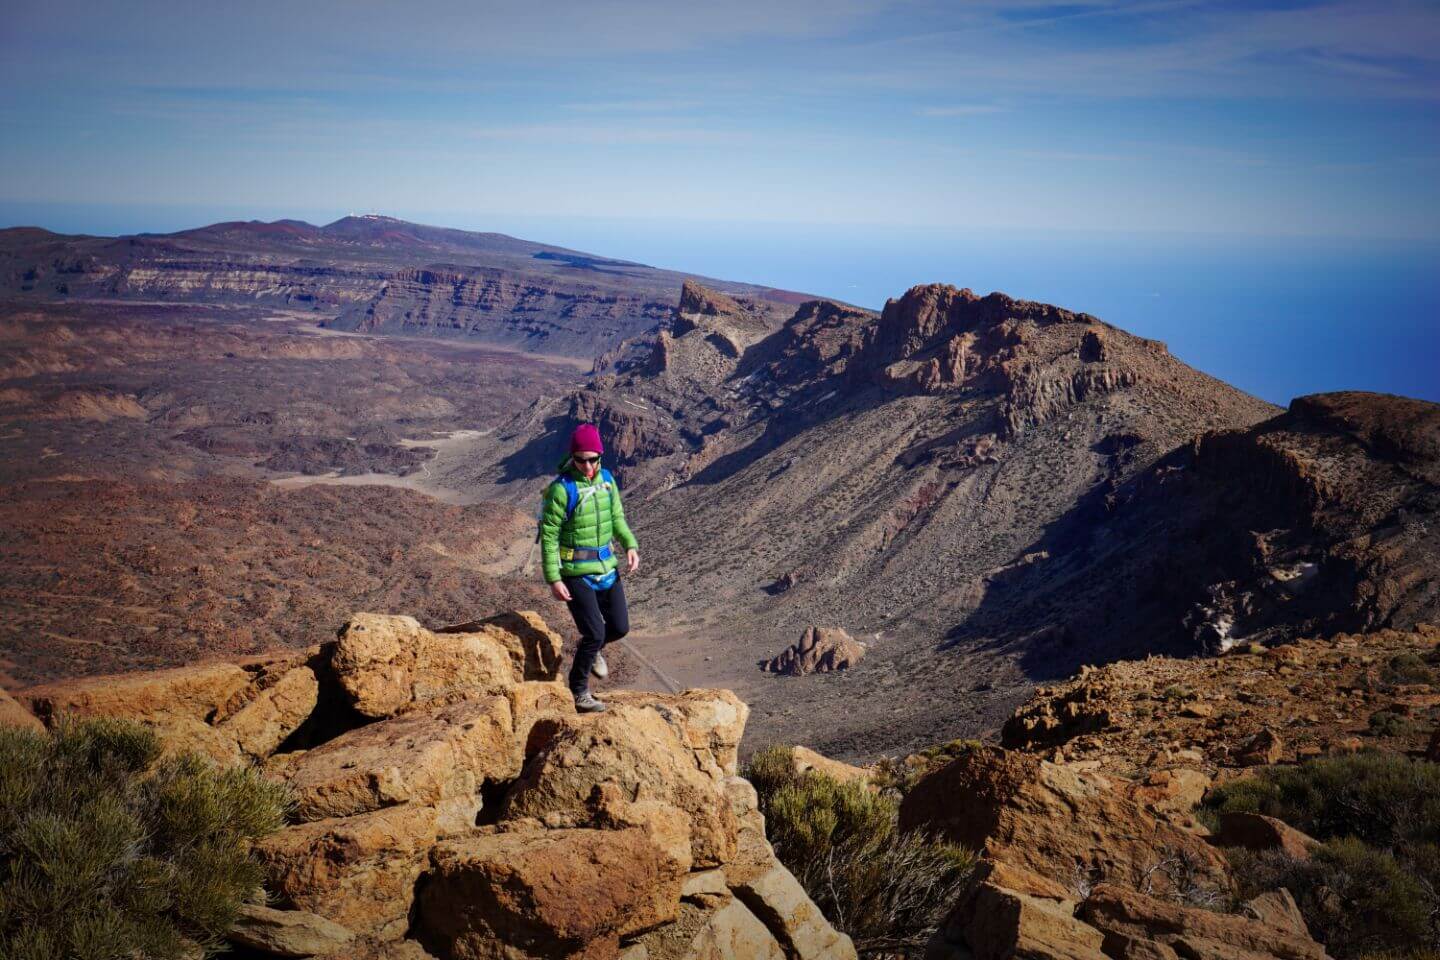 Guajara Summit Hike - Hikes in the Tenerife Mountains